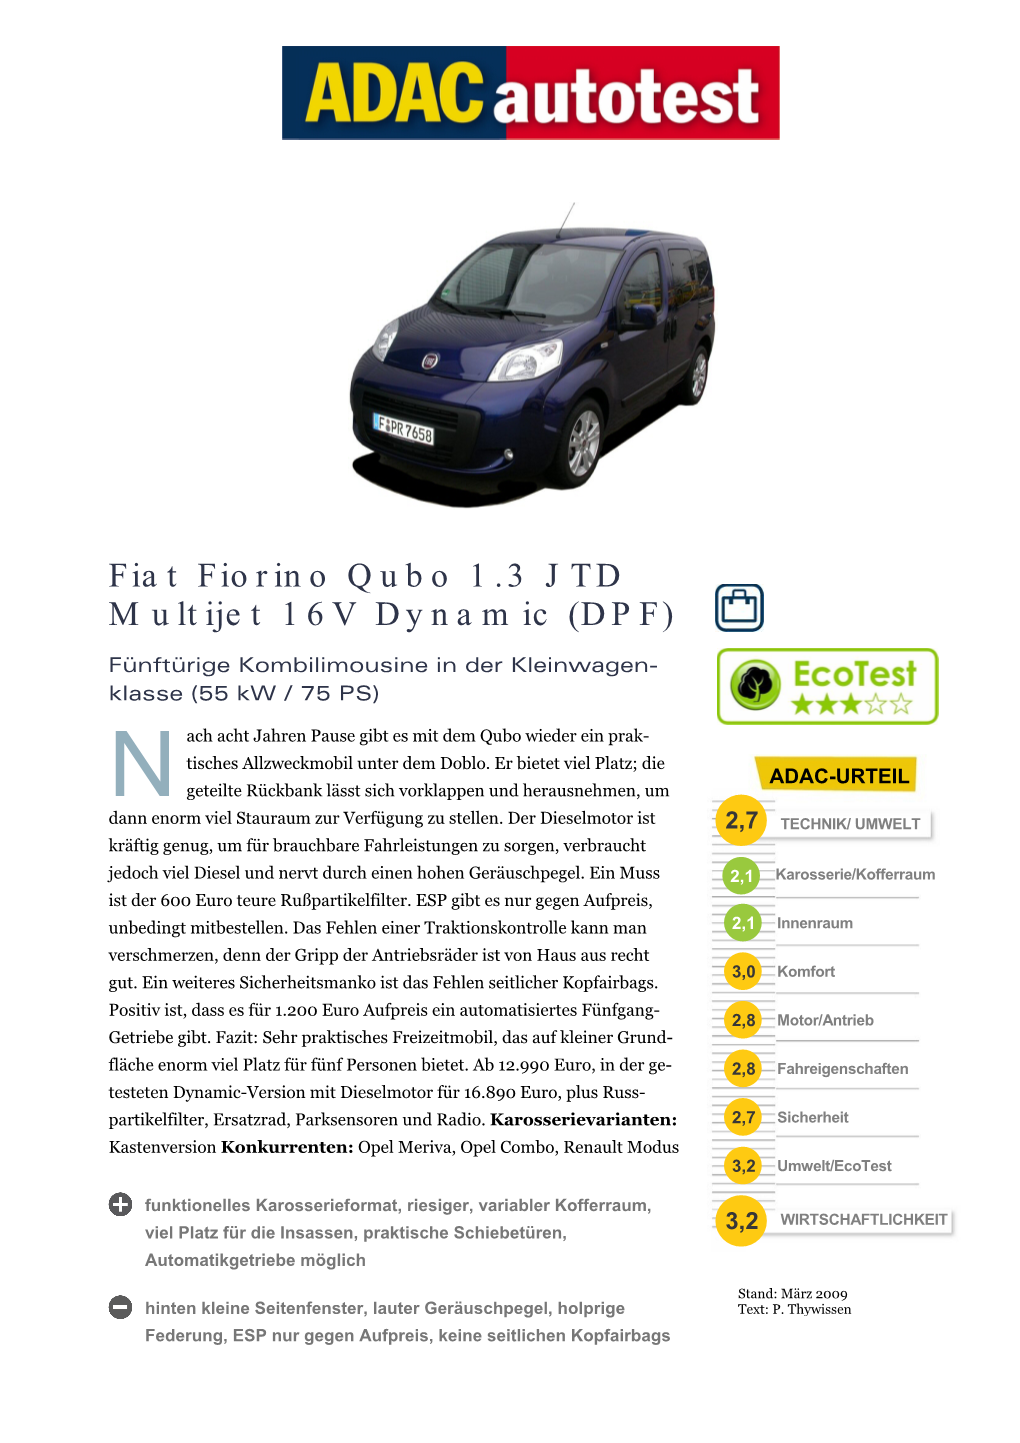 Fiat Fiorino Qubo 1.3 JTD Multijet 16V Dynamic (DPF)